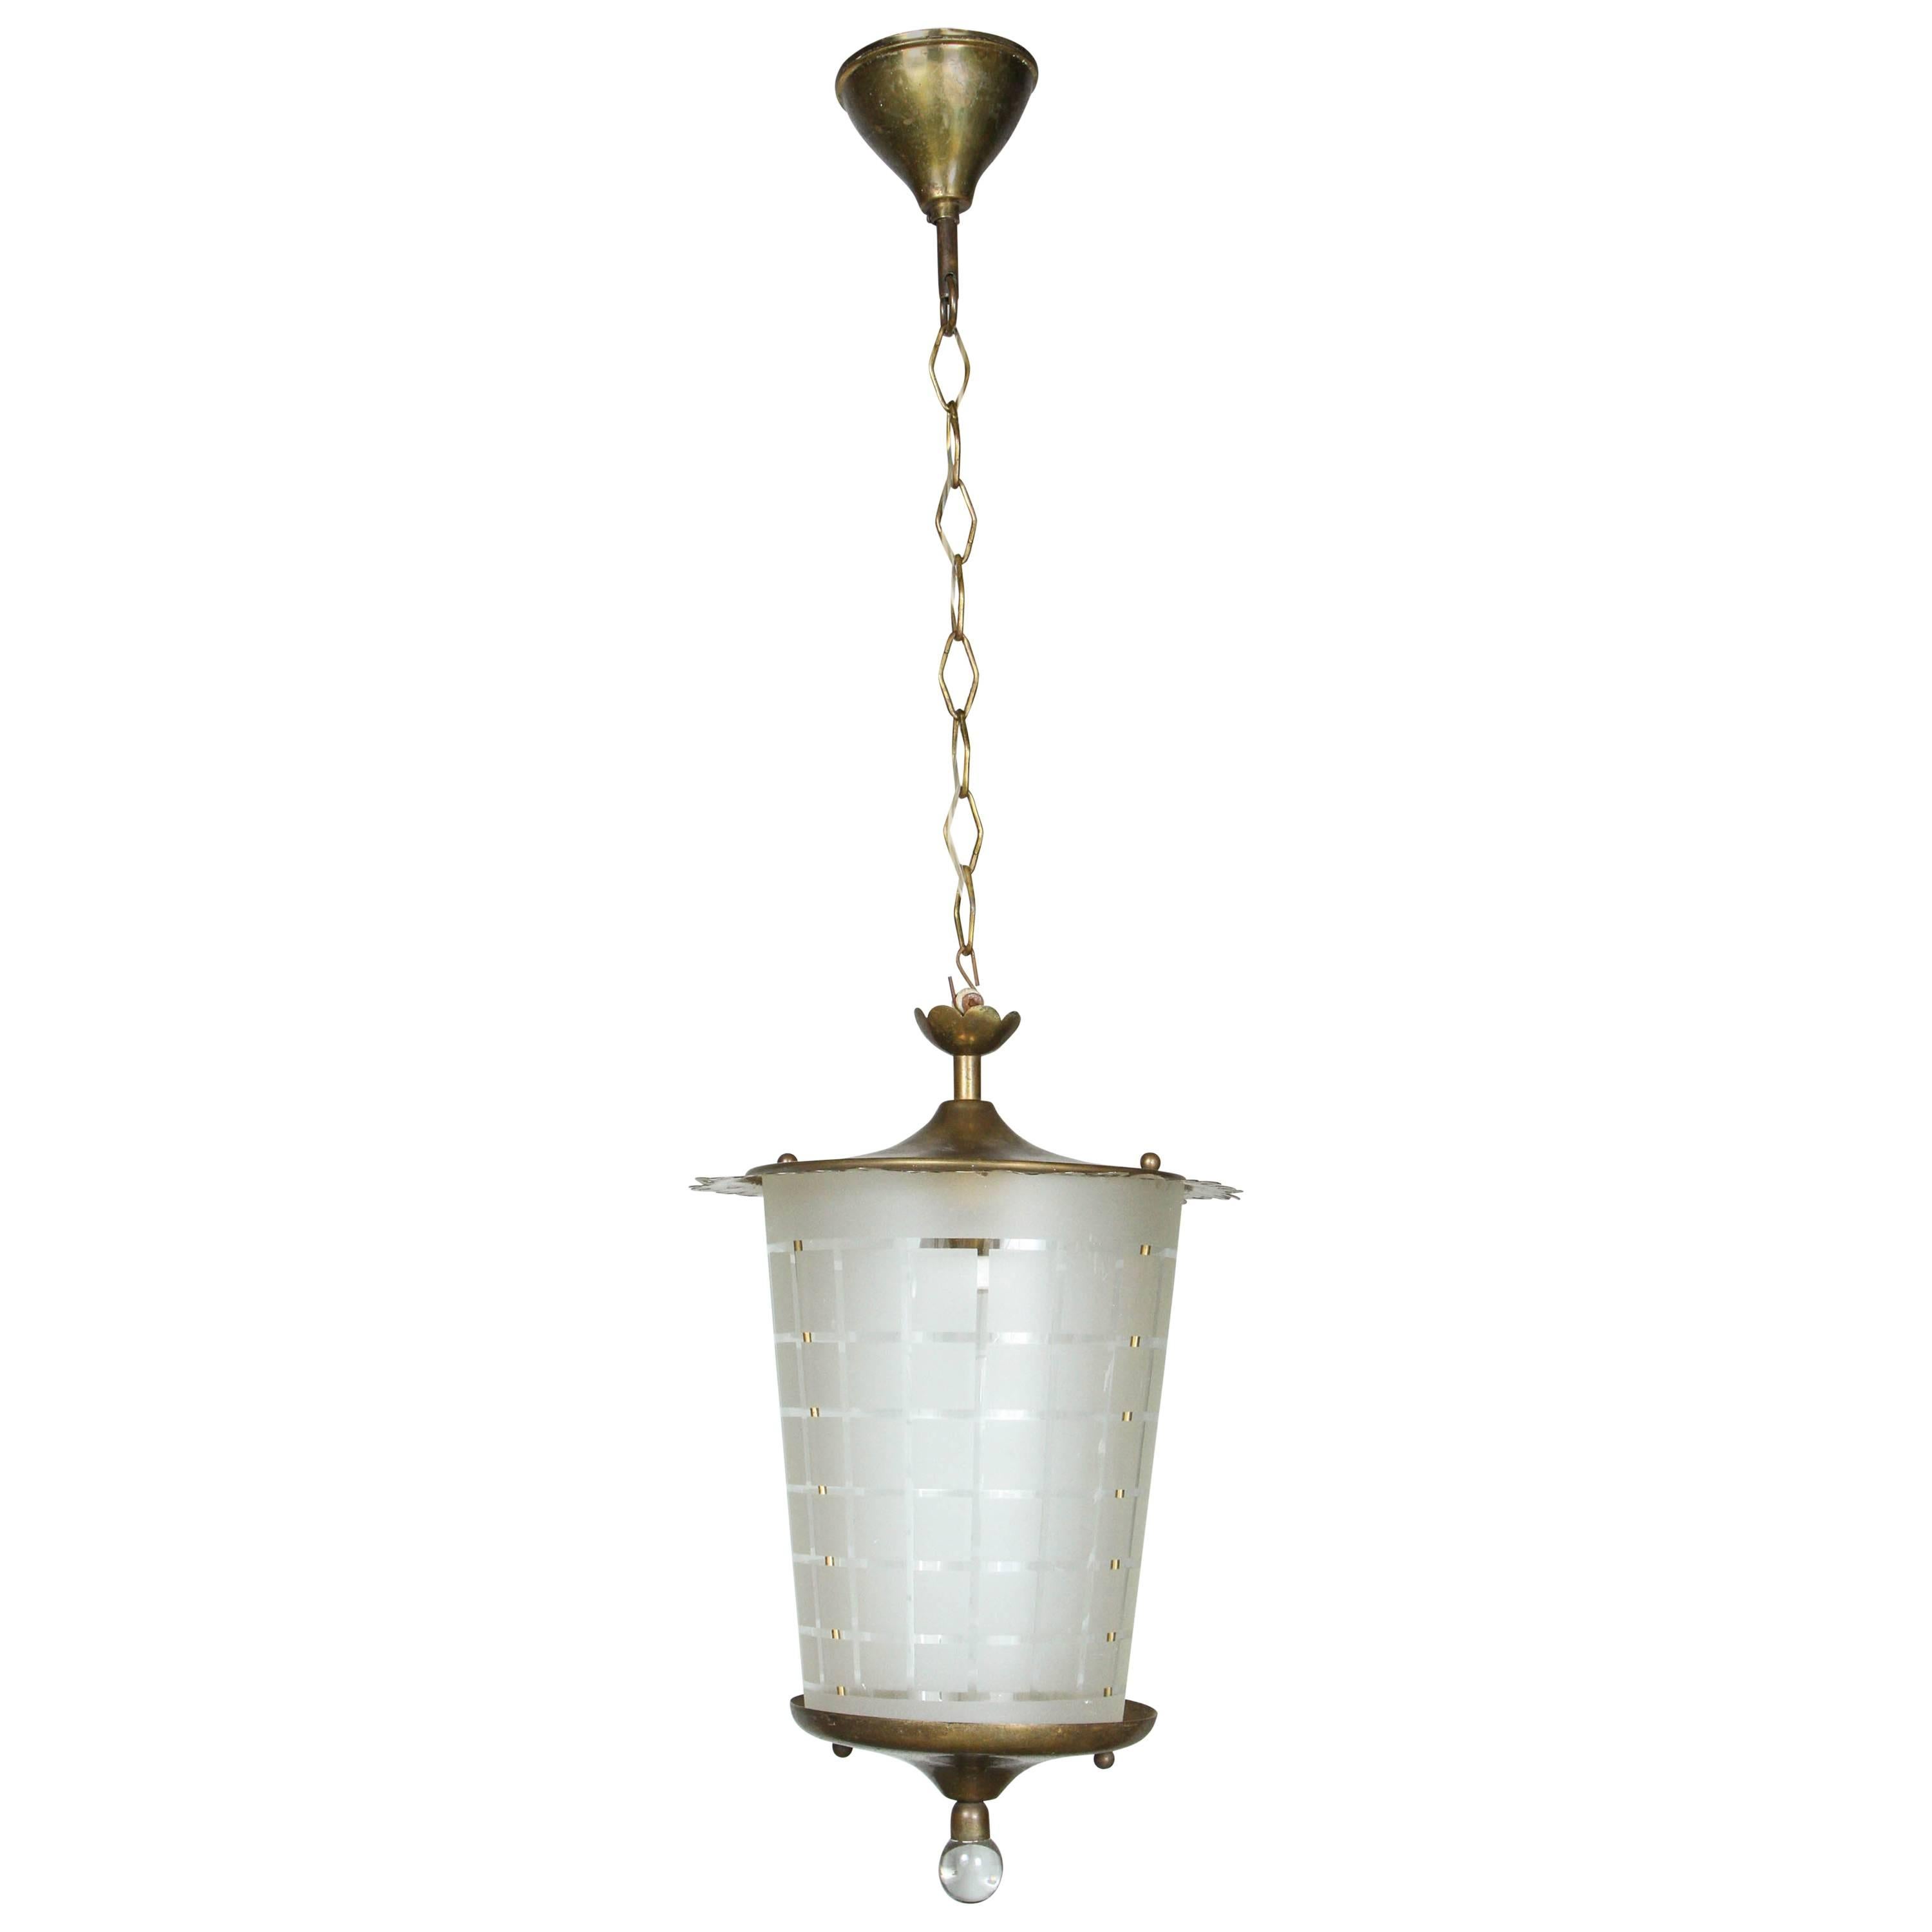 Vintage Italian Brass and Glass Lantern Pendant